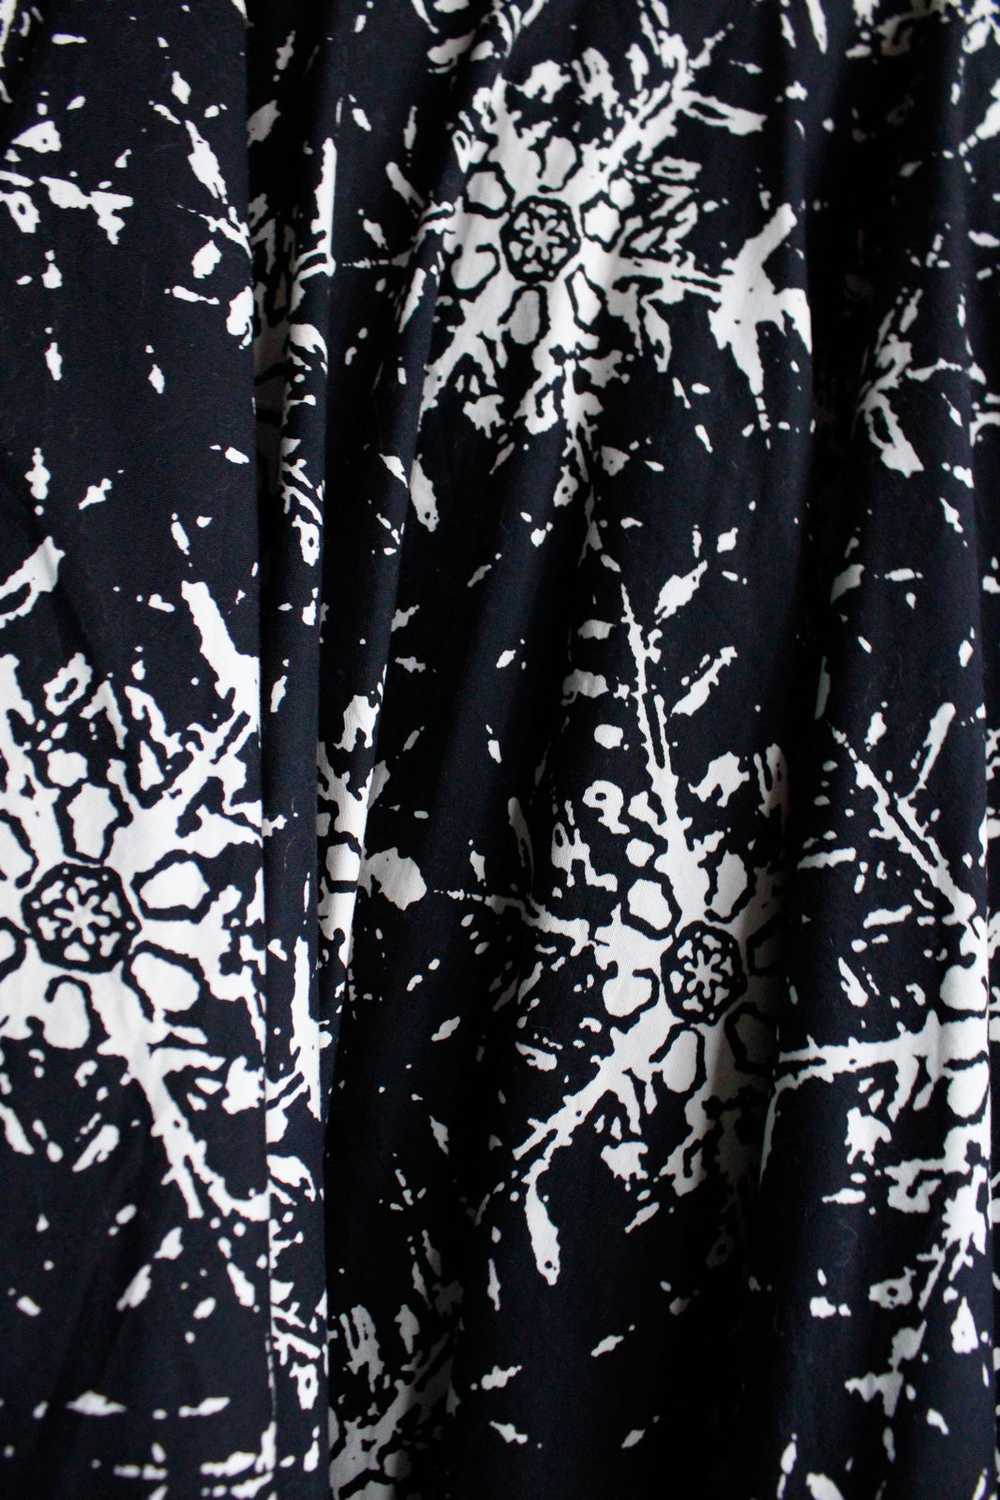 1950s Snowflake Cotton Swing Skirt - Xsmall - image 10